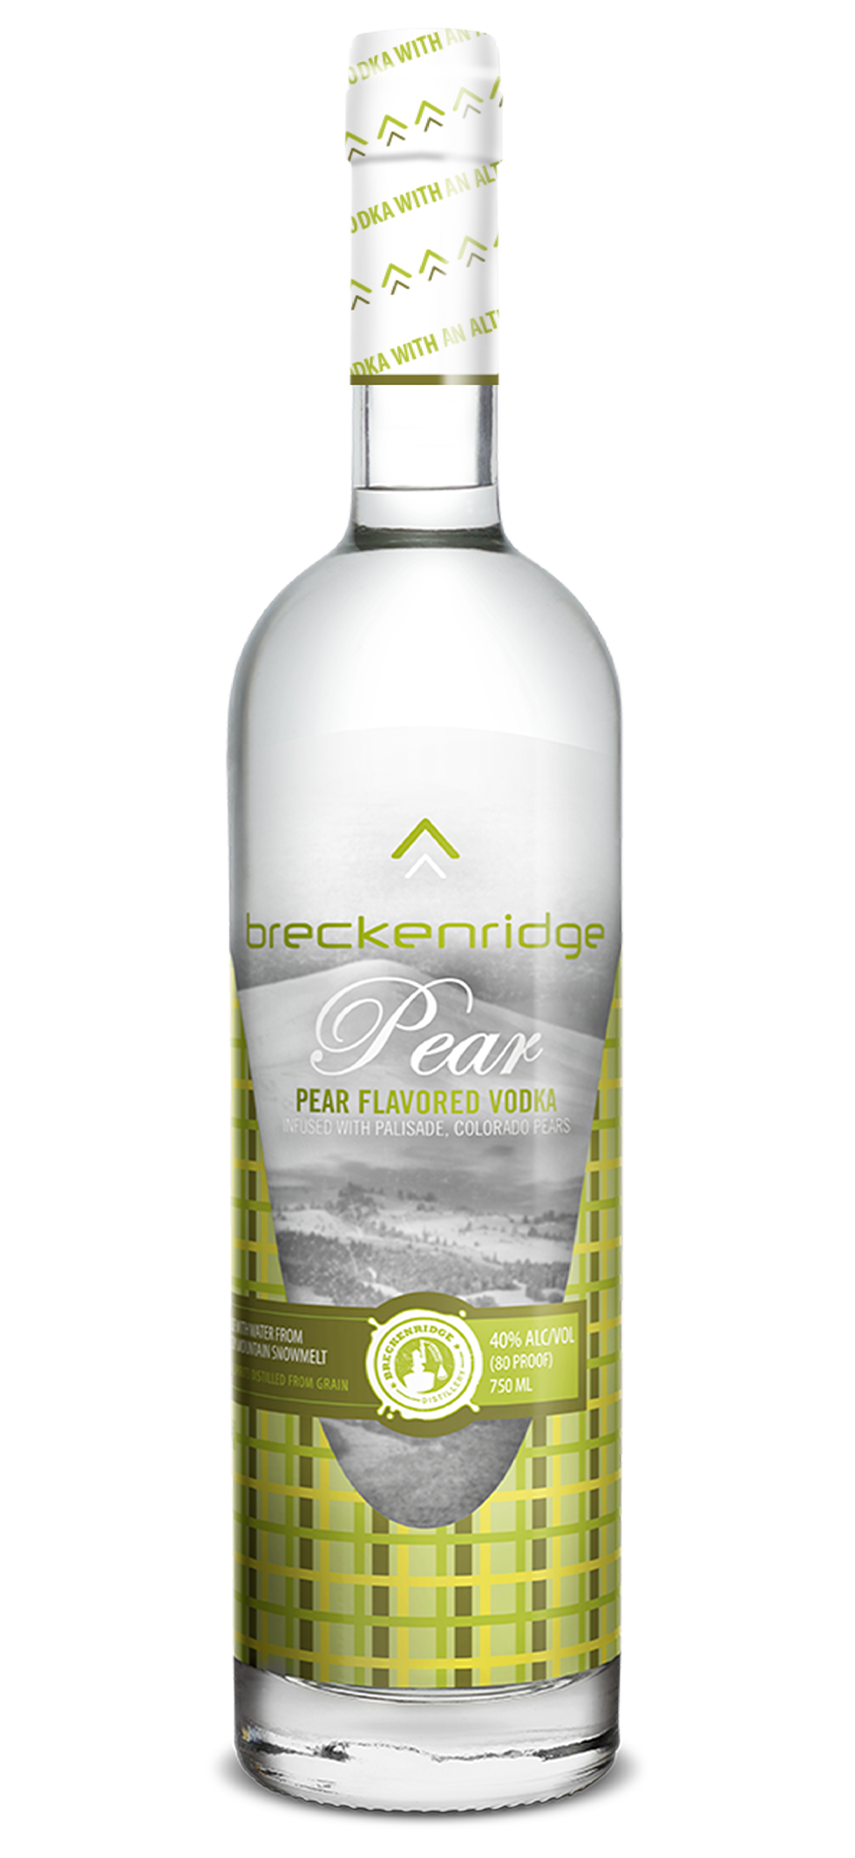 Breckenridge Pear Vodka bottle 750 mL